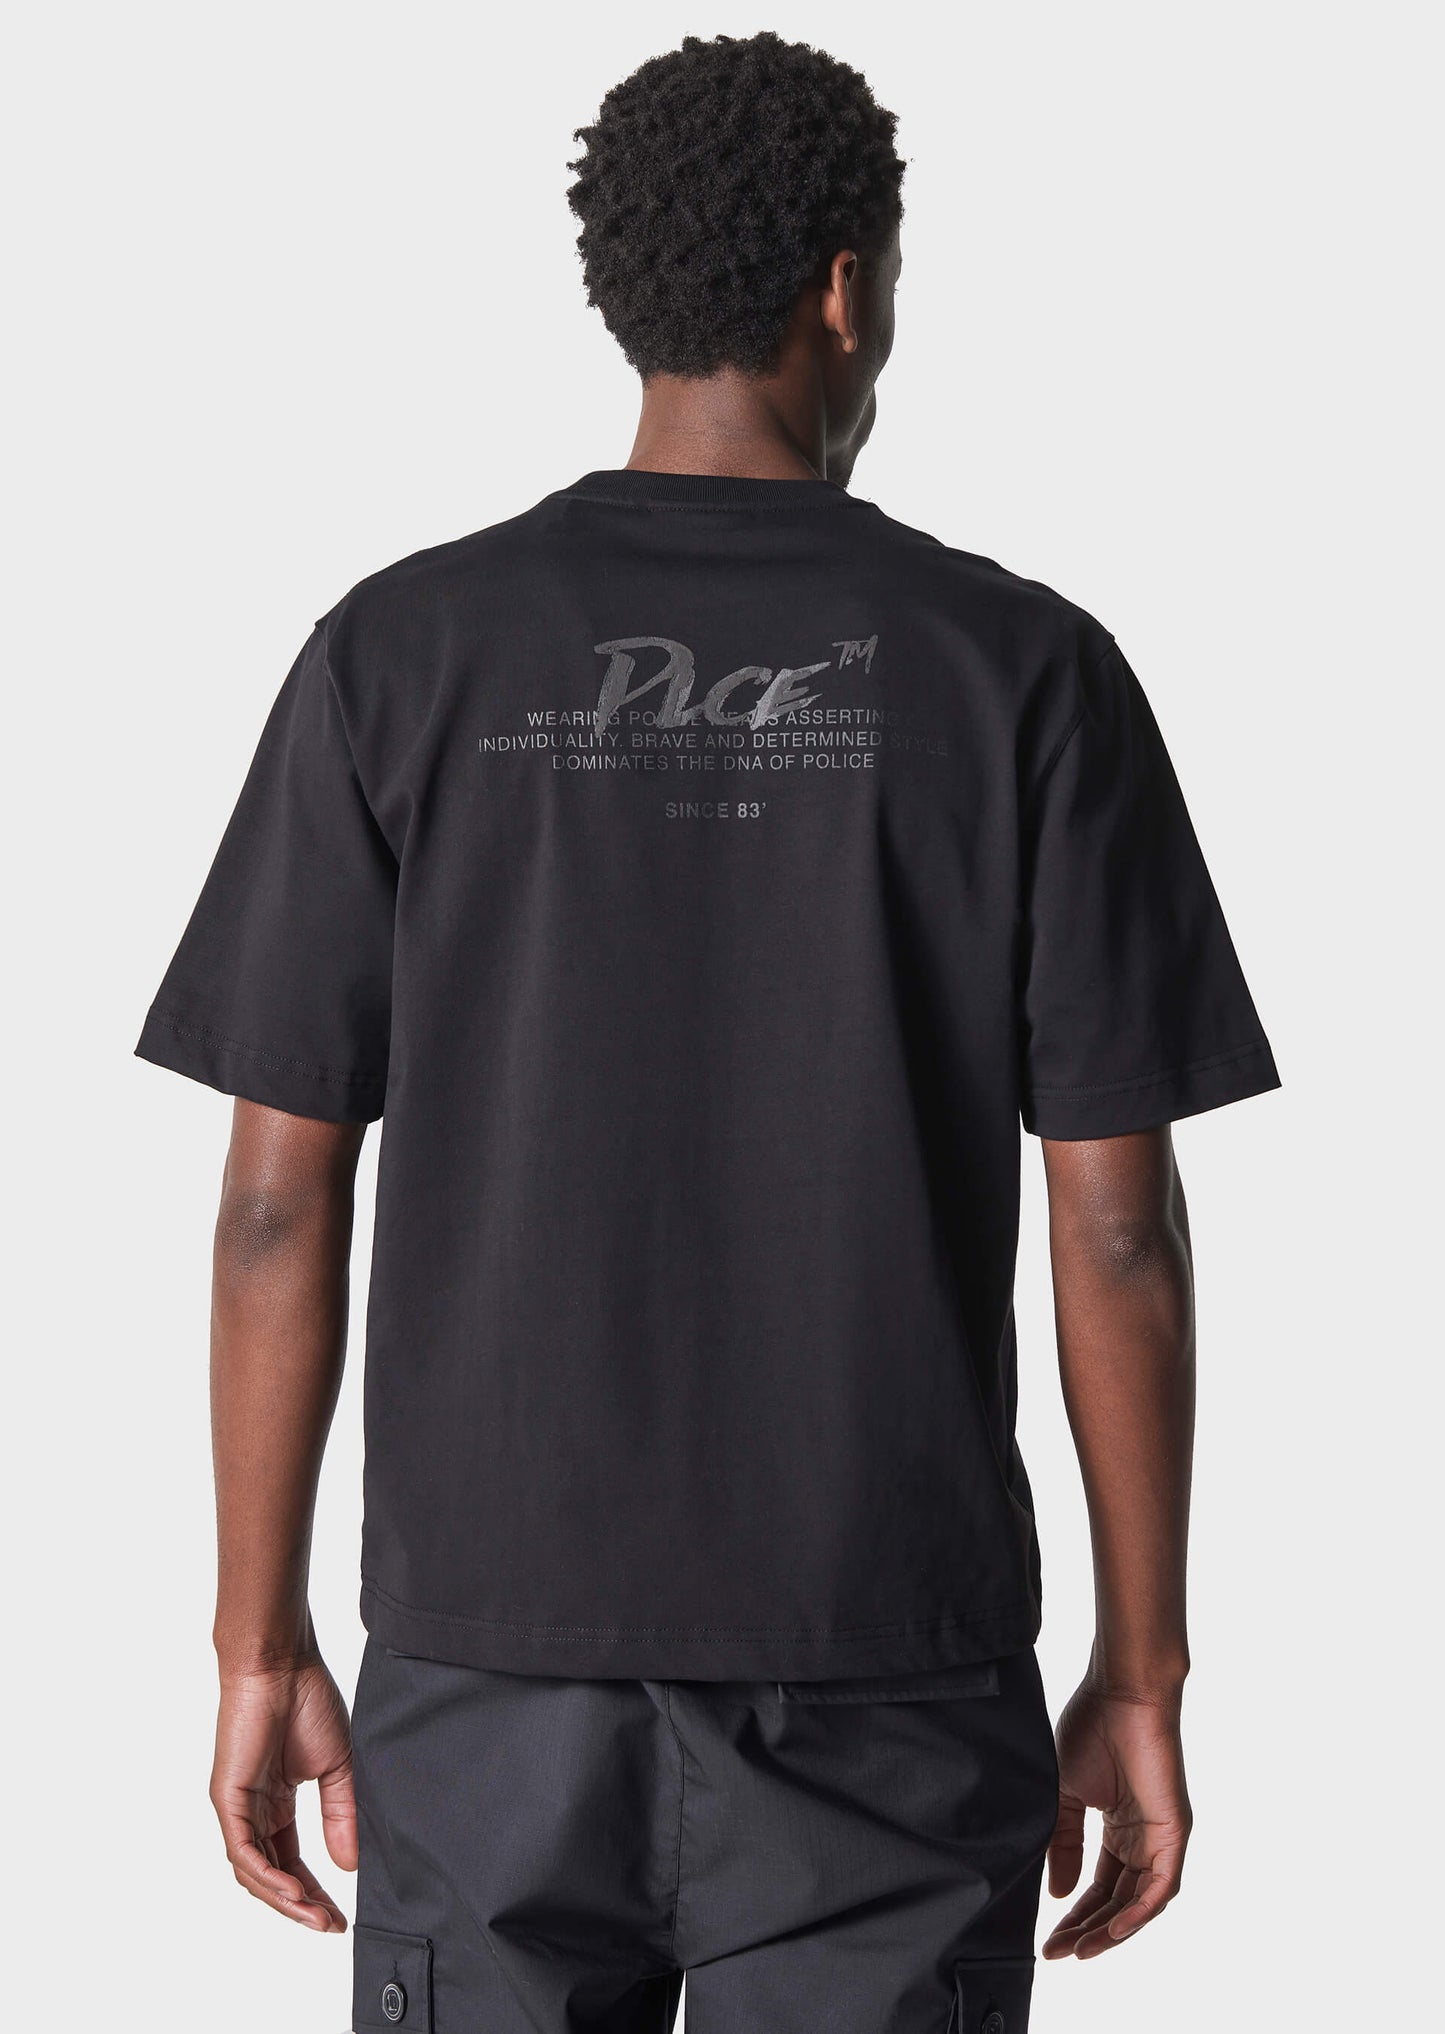 Coles Black T-Shirt